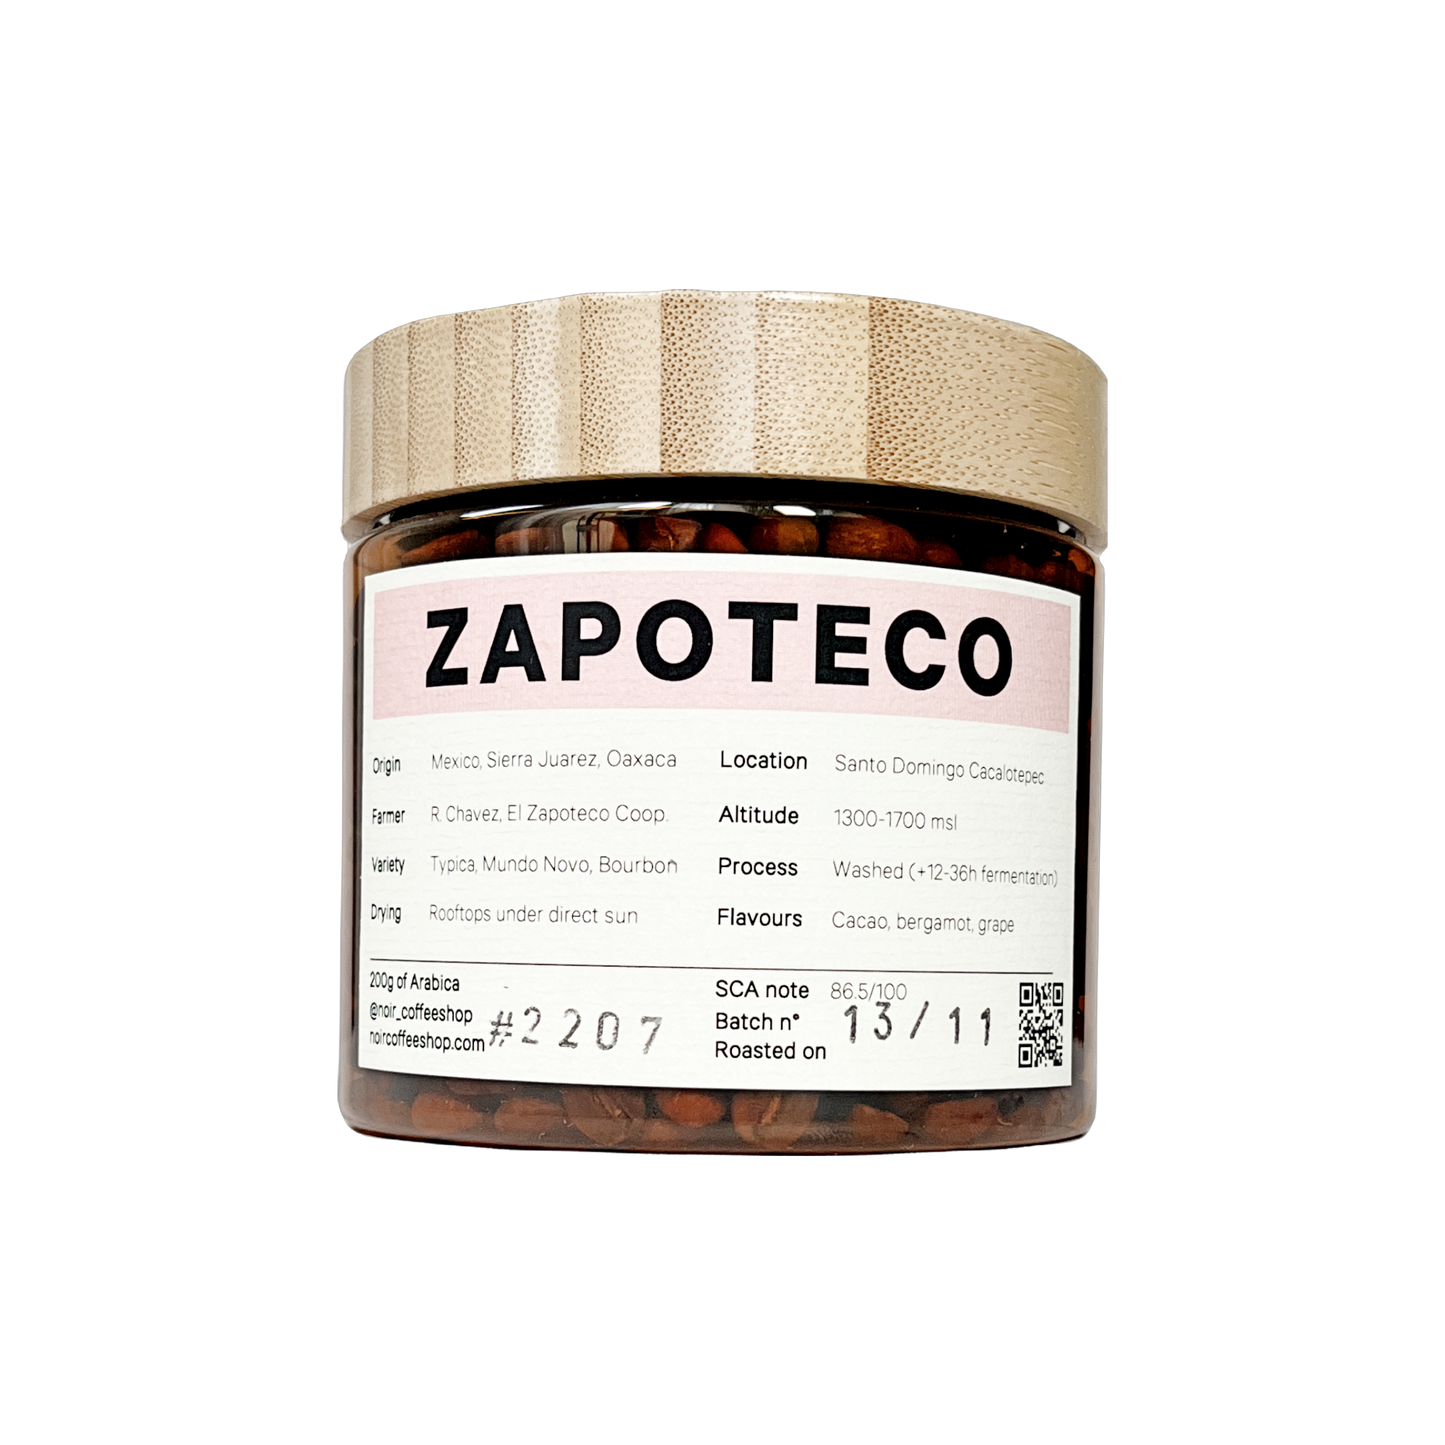 Zapoteco - Mexico